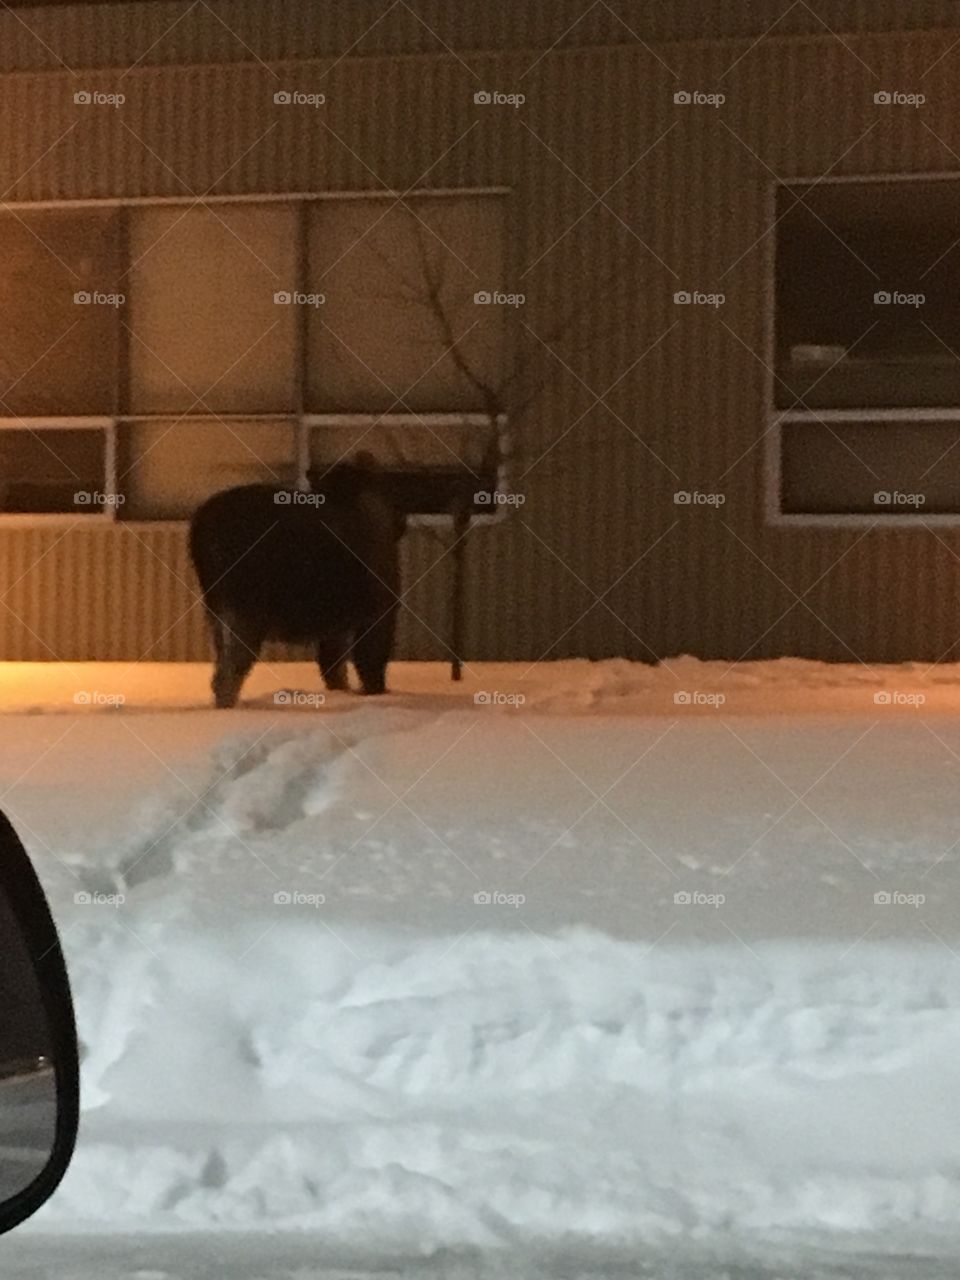 More moose